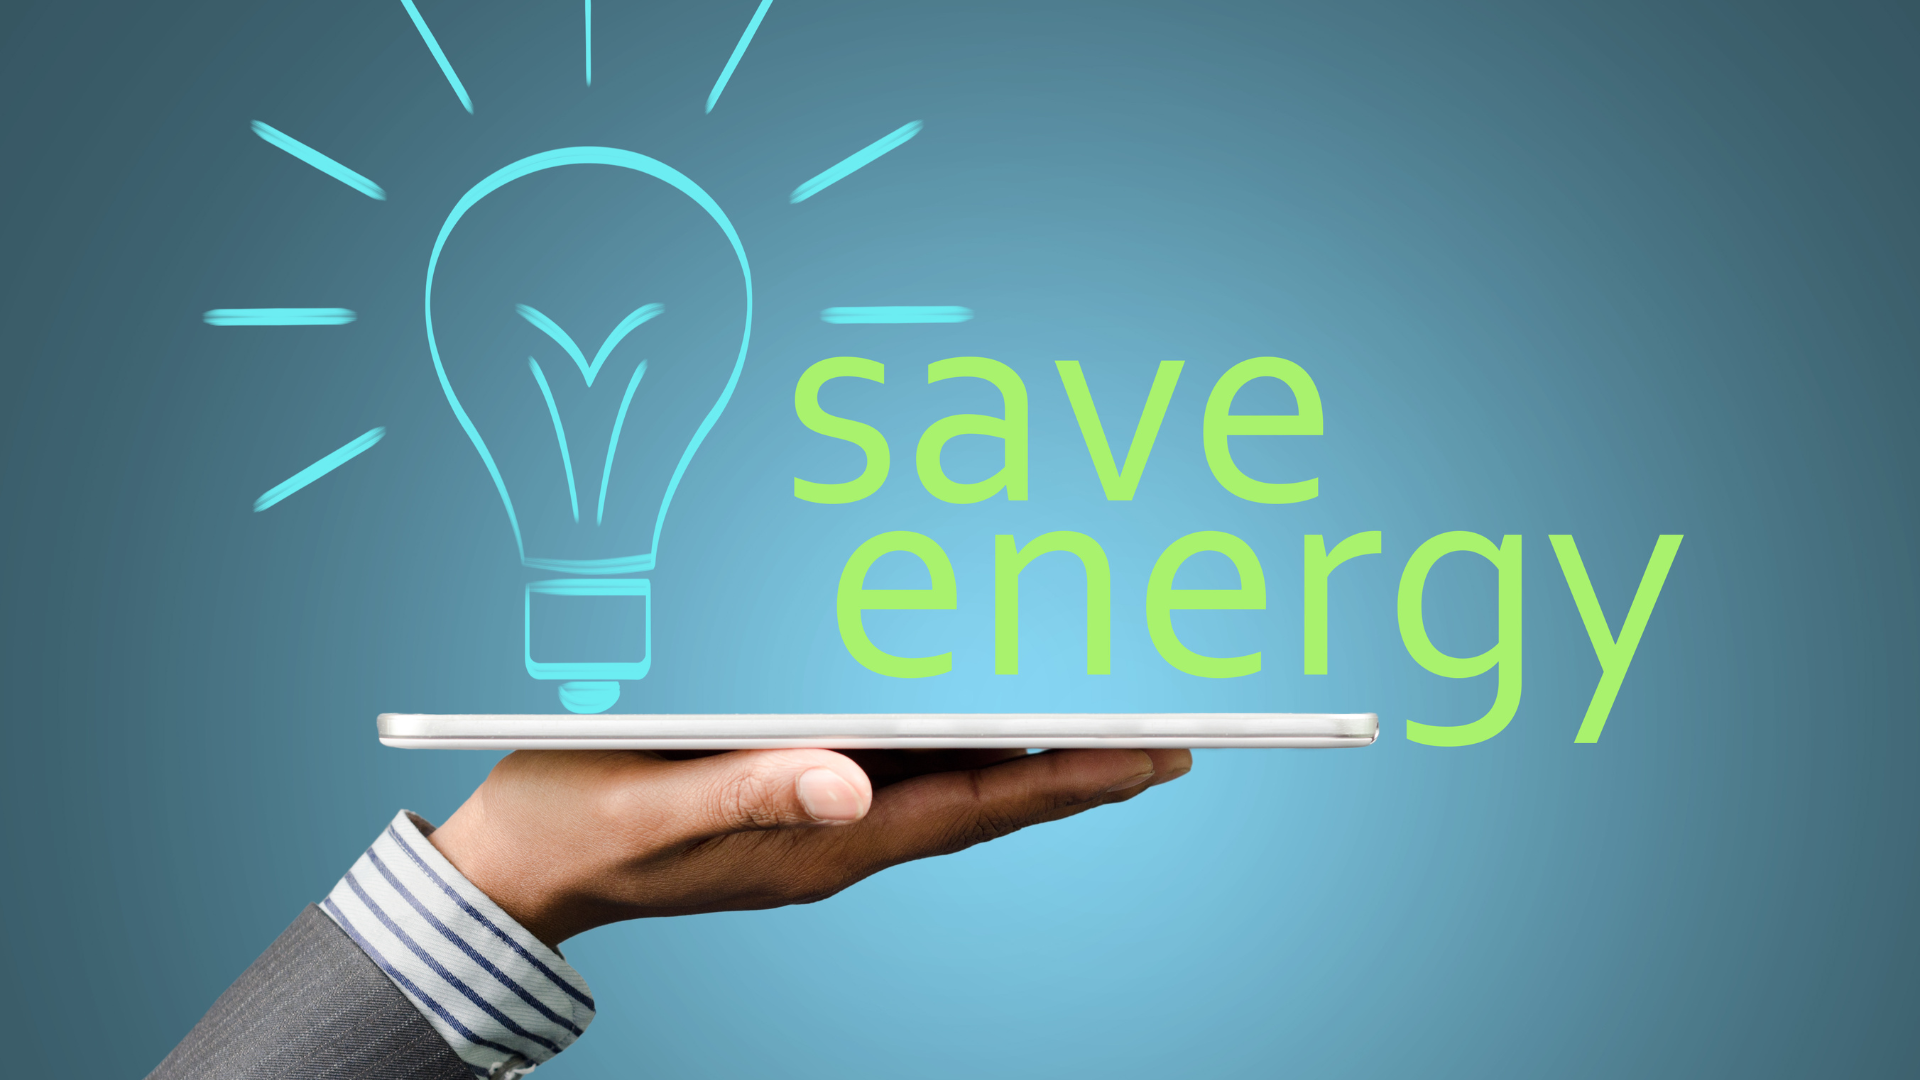 Save Energy. Energy efficiency. Картинка Energy saving. Conserve Energy. State energy